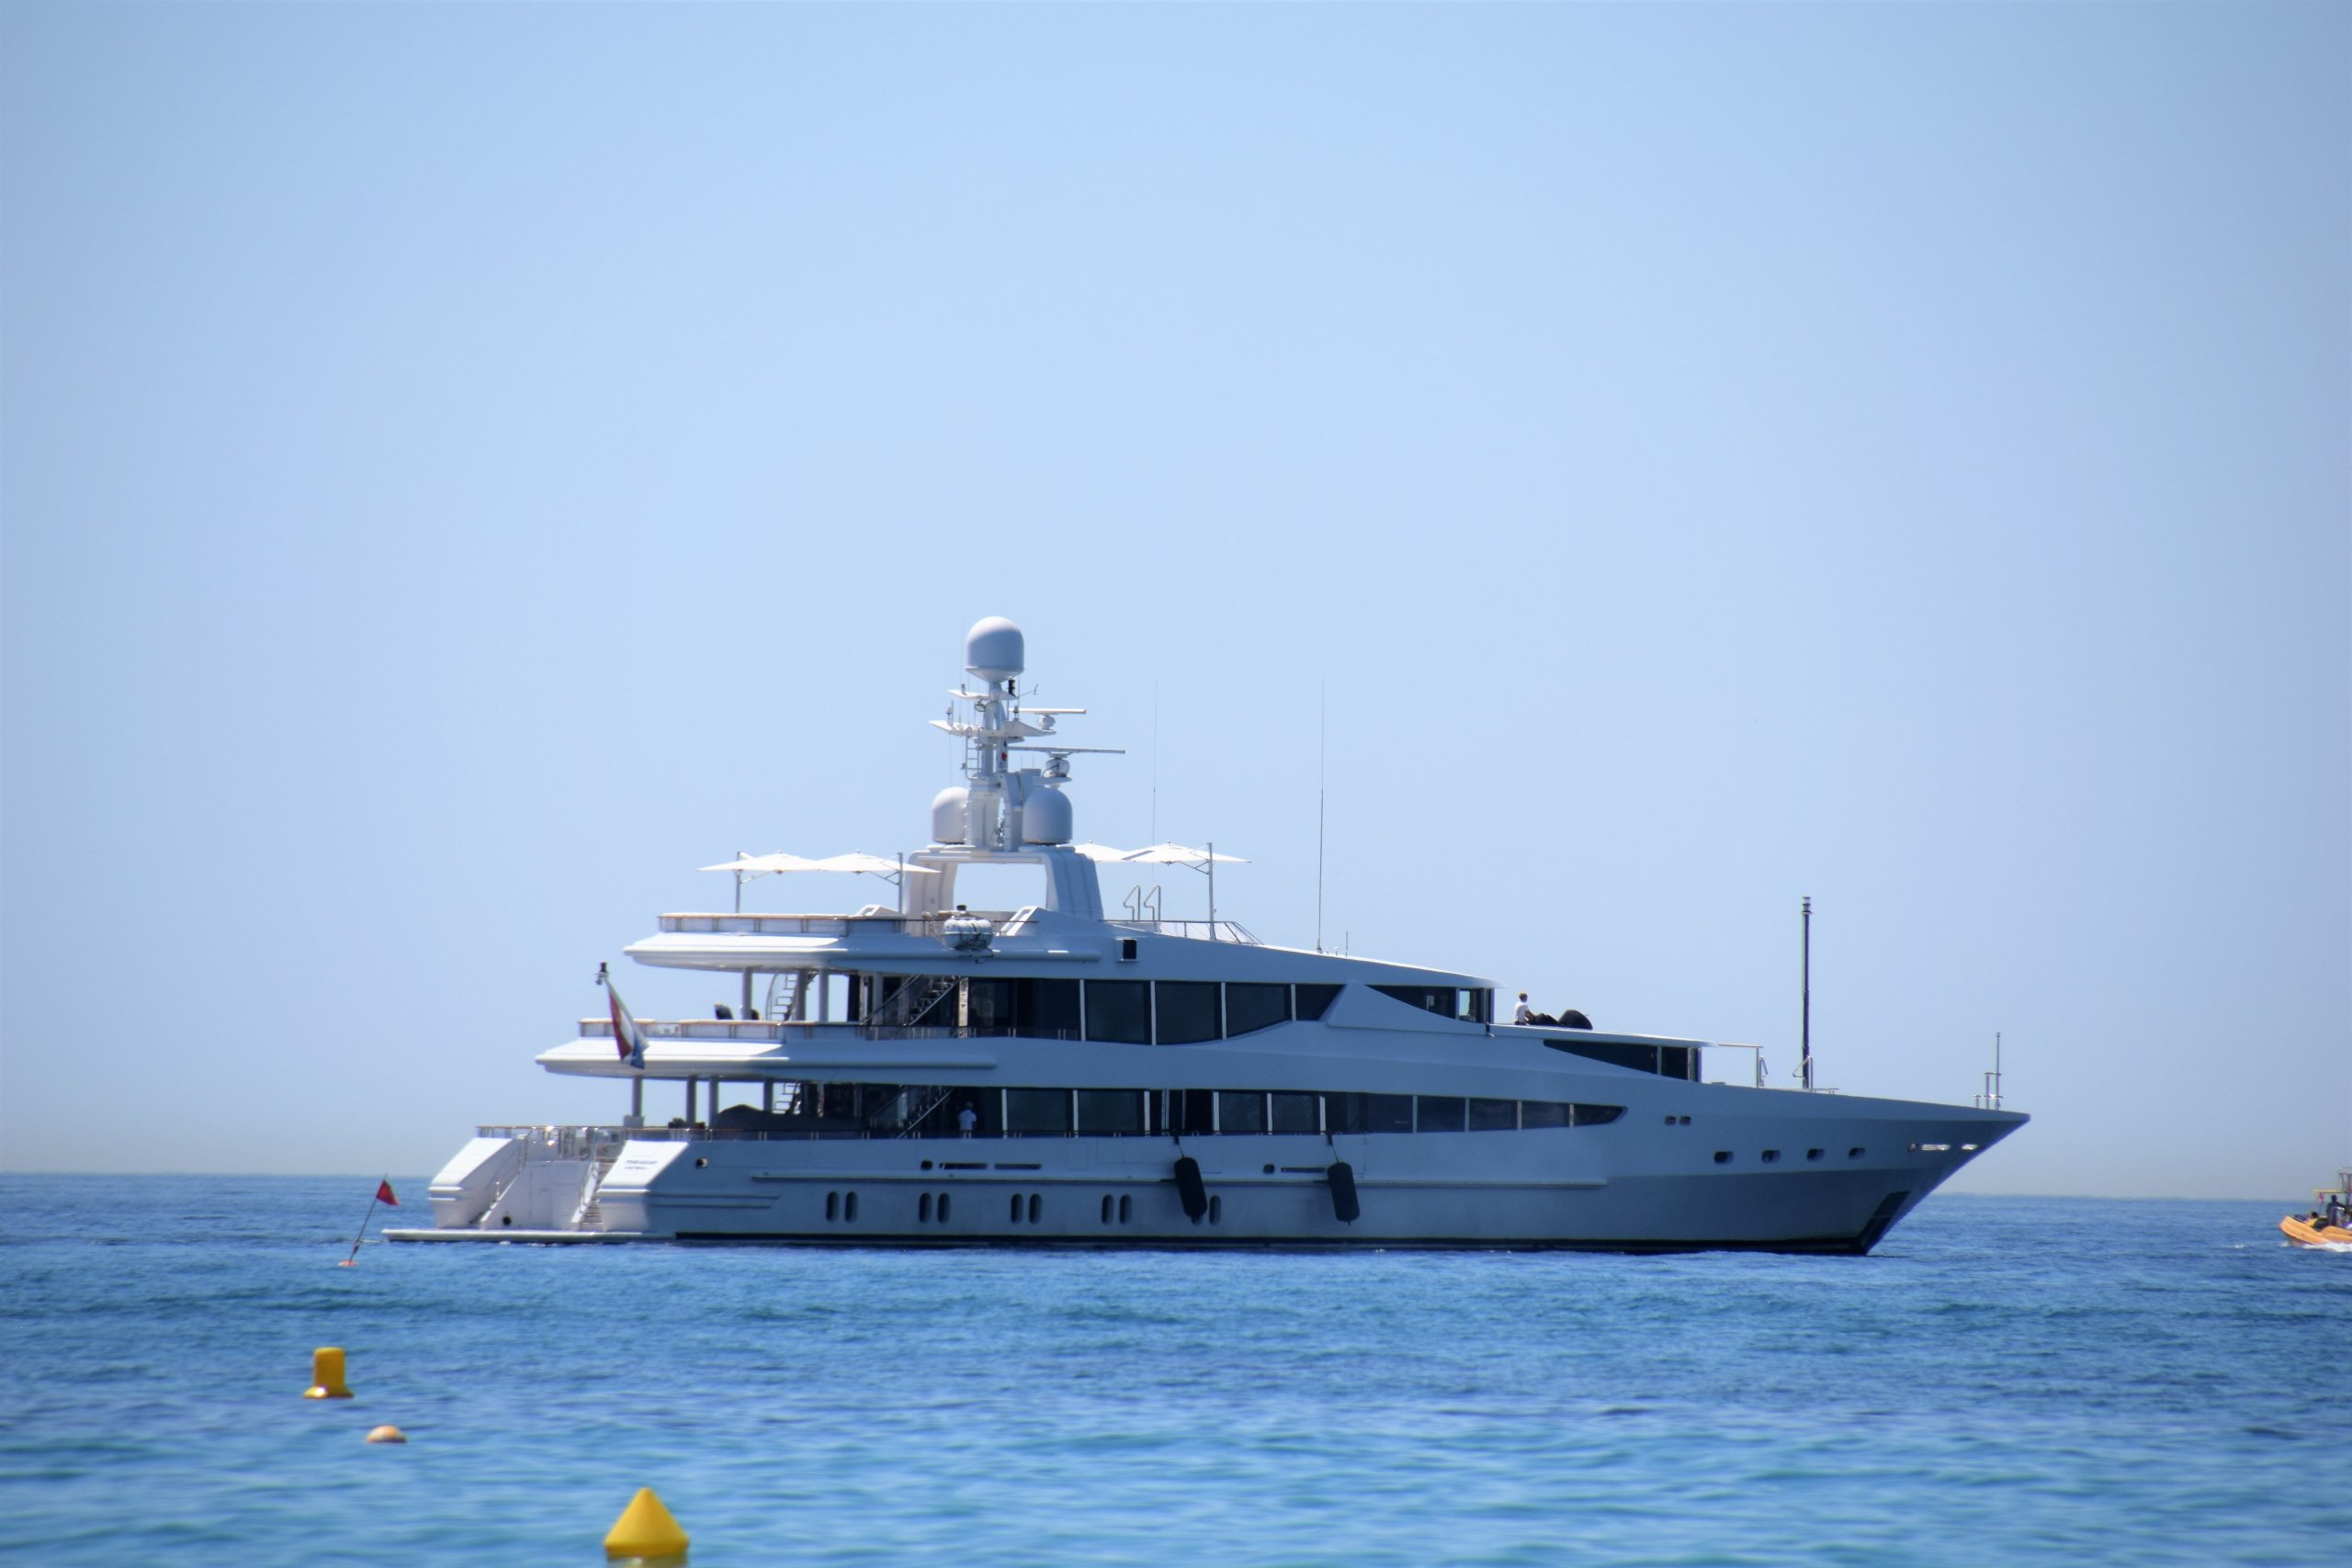 Amitié yacht - Oceanco - 2000 - propriétaire Jasper de Rooij